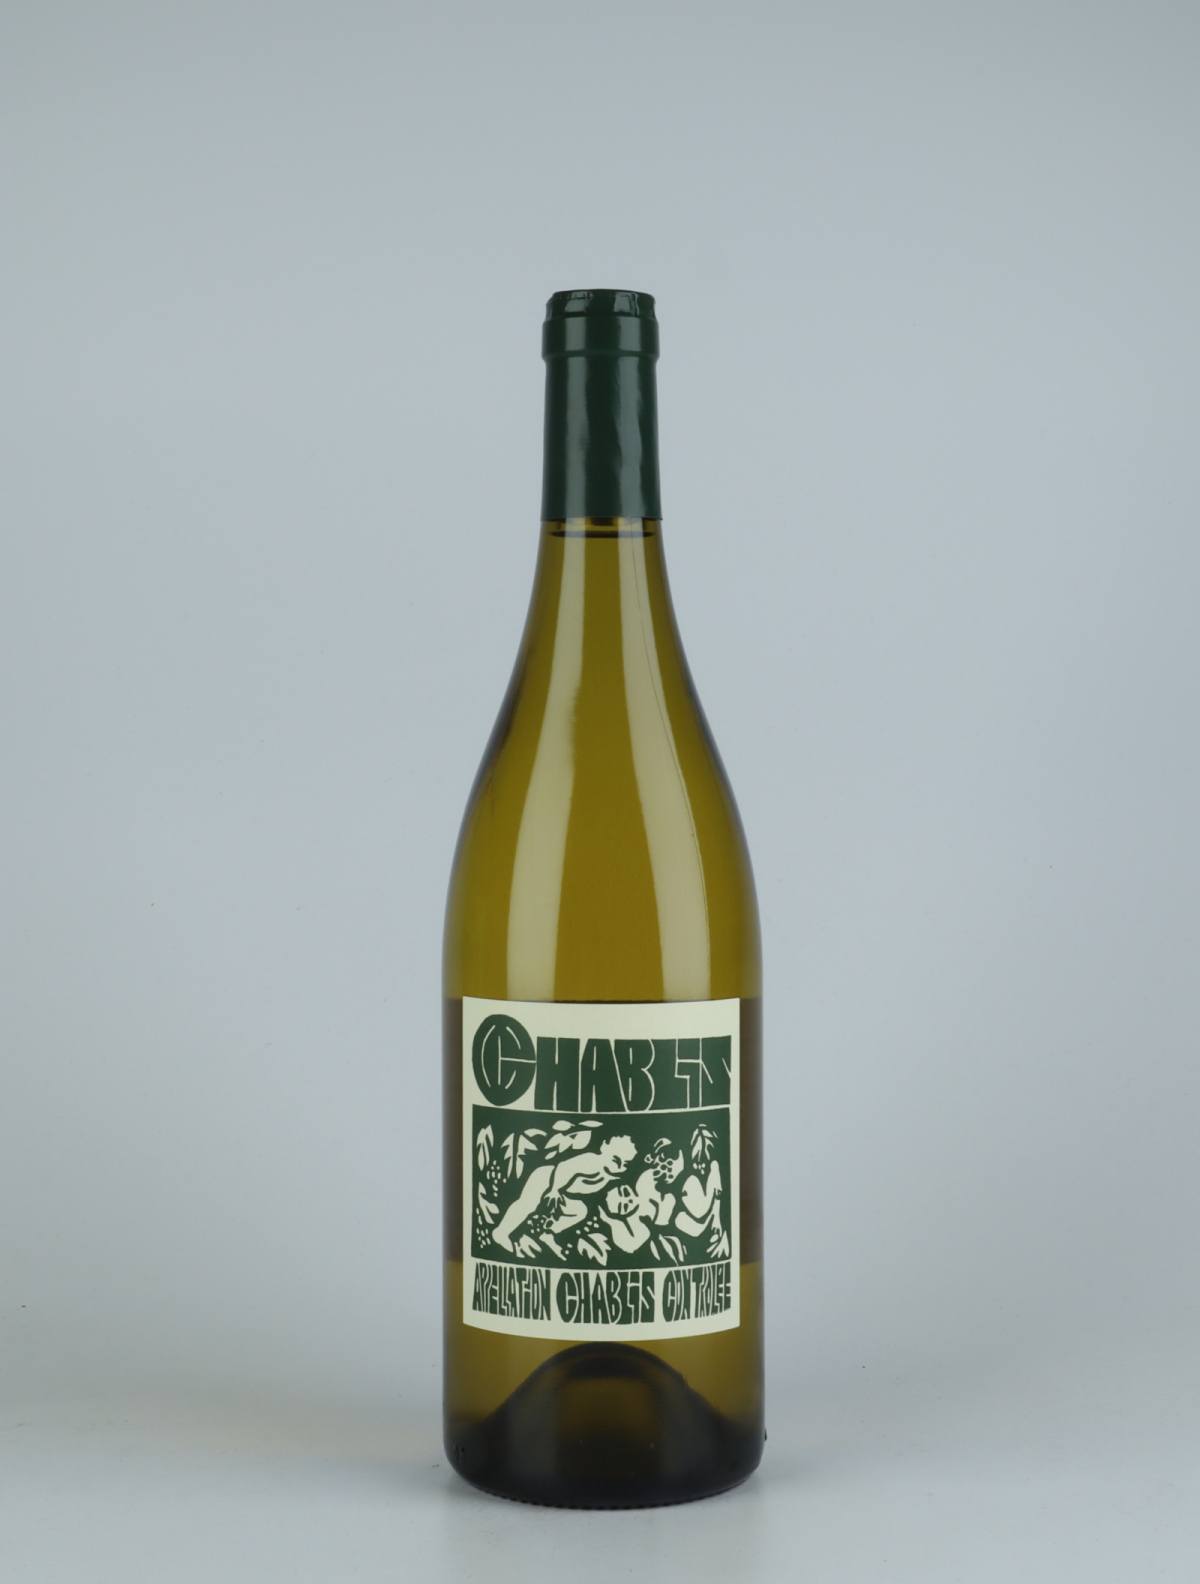 A bottle 2020 Chablis White wine from La Sœur Cadette, Burgundy in France